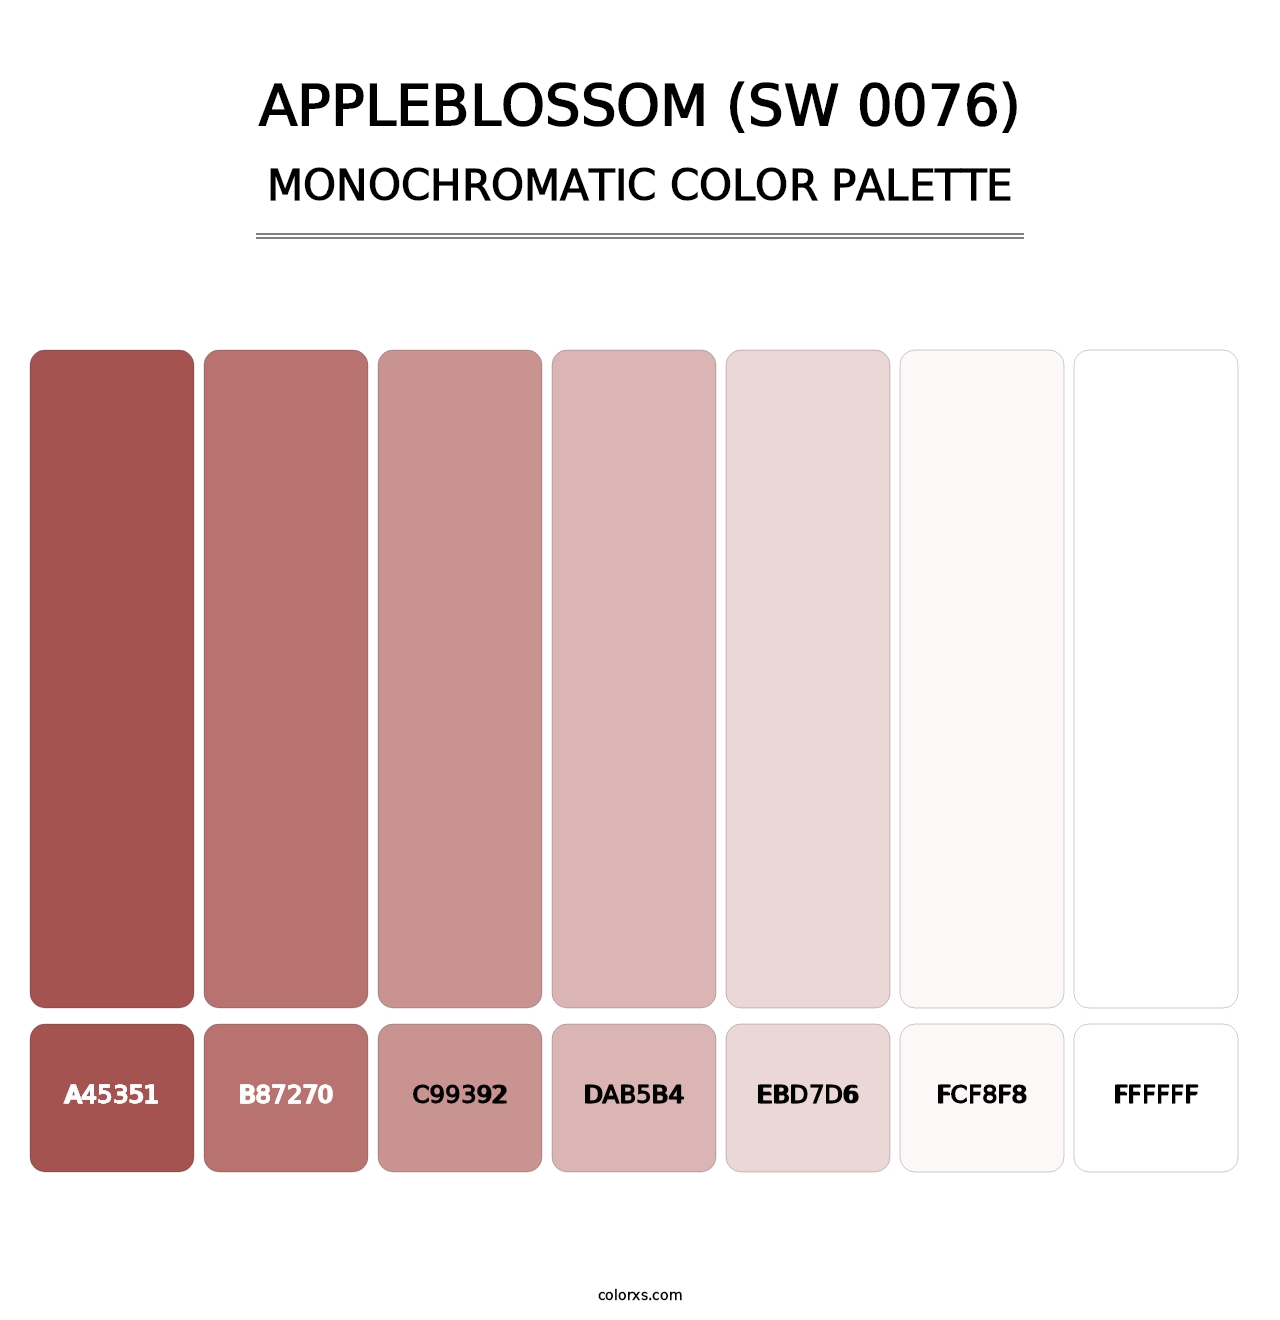 Appleblossom (SW 0076) - Monochromatic Color Palette